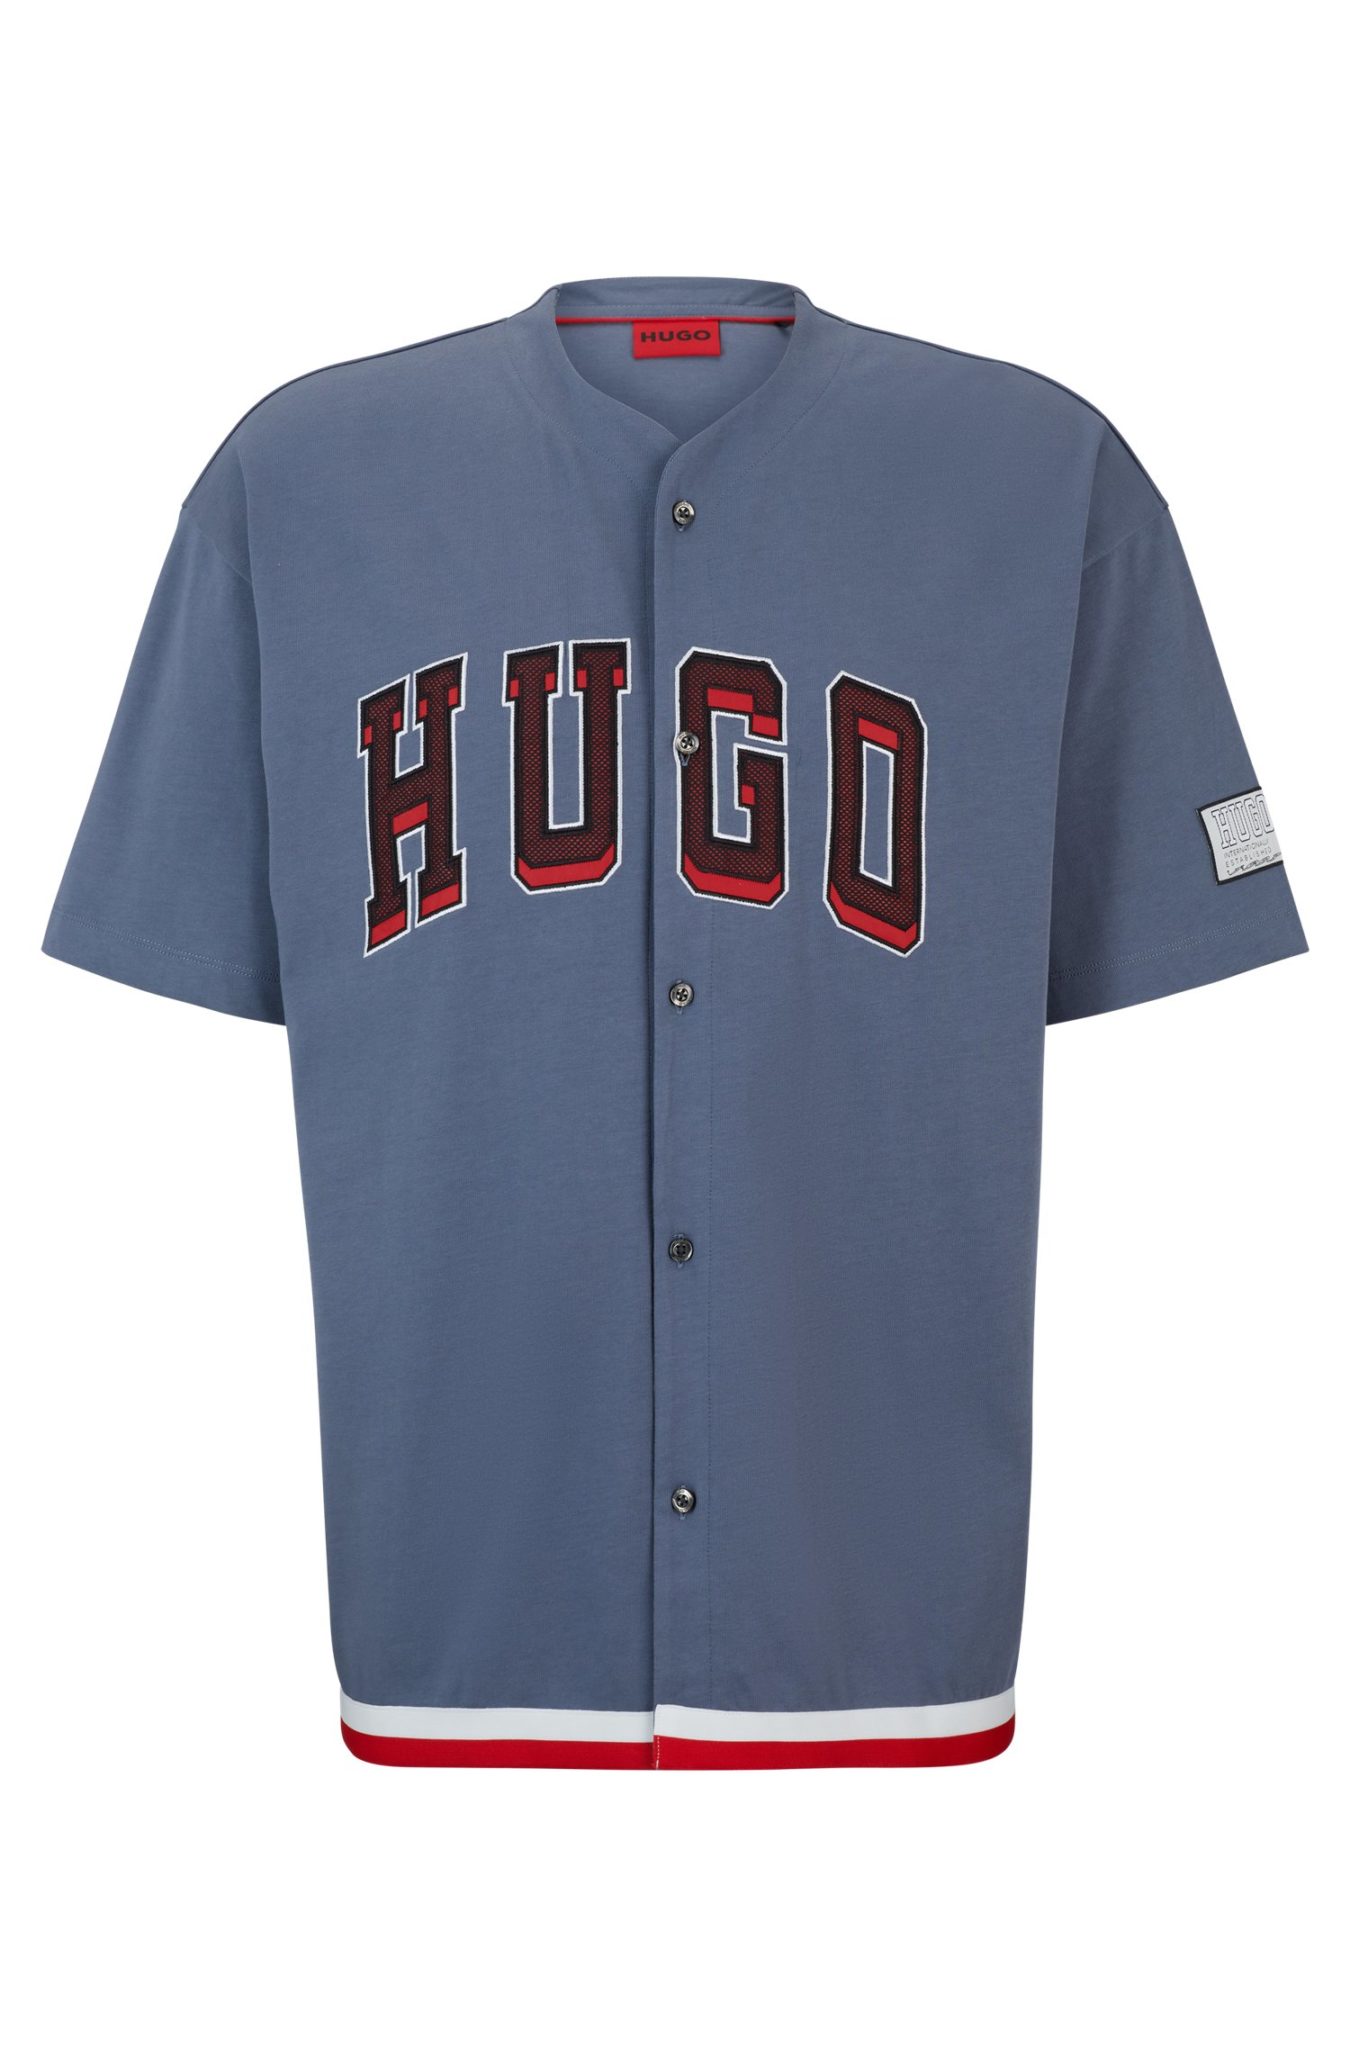 Hugo Boss T-shirt de basket Oversized Fit style universitaire avec logo